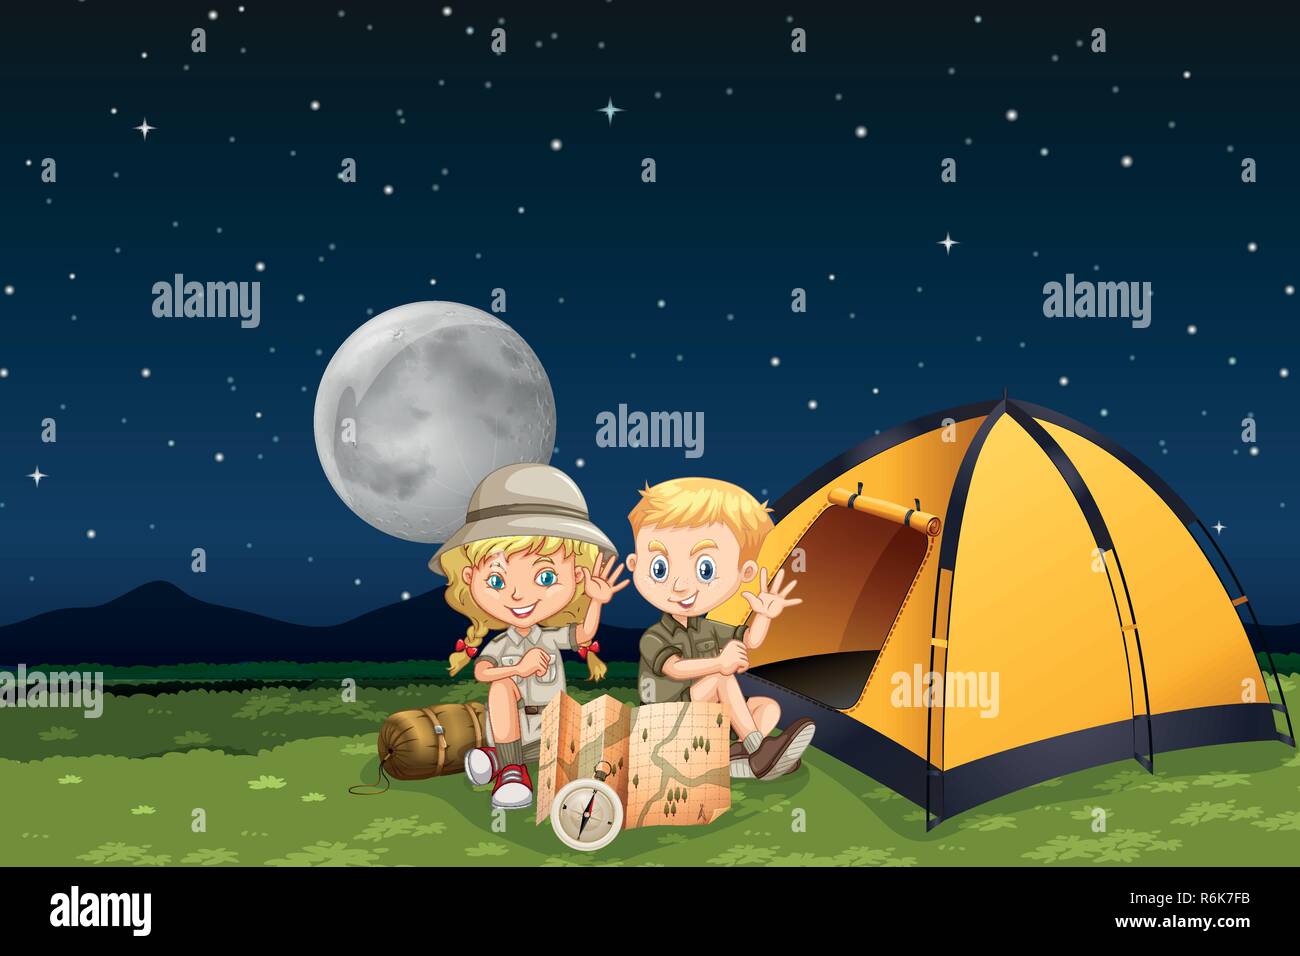 Children camping at night illustration Stock Vector